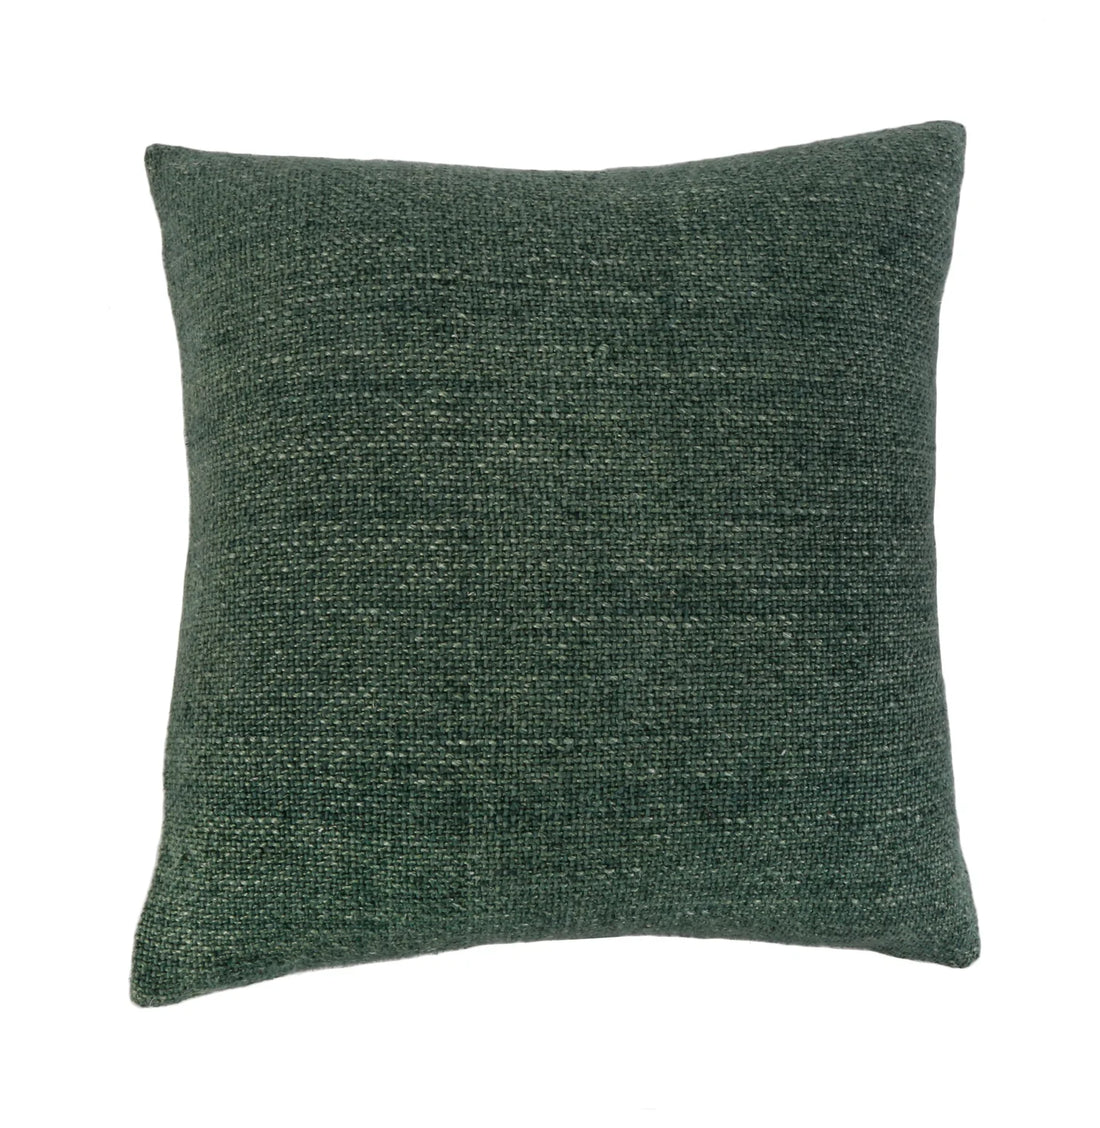 Hendrick Square Pillow, Moss